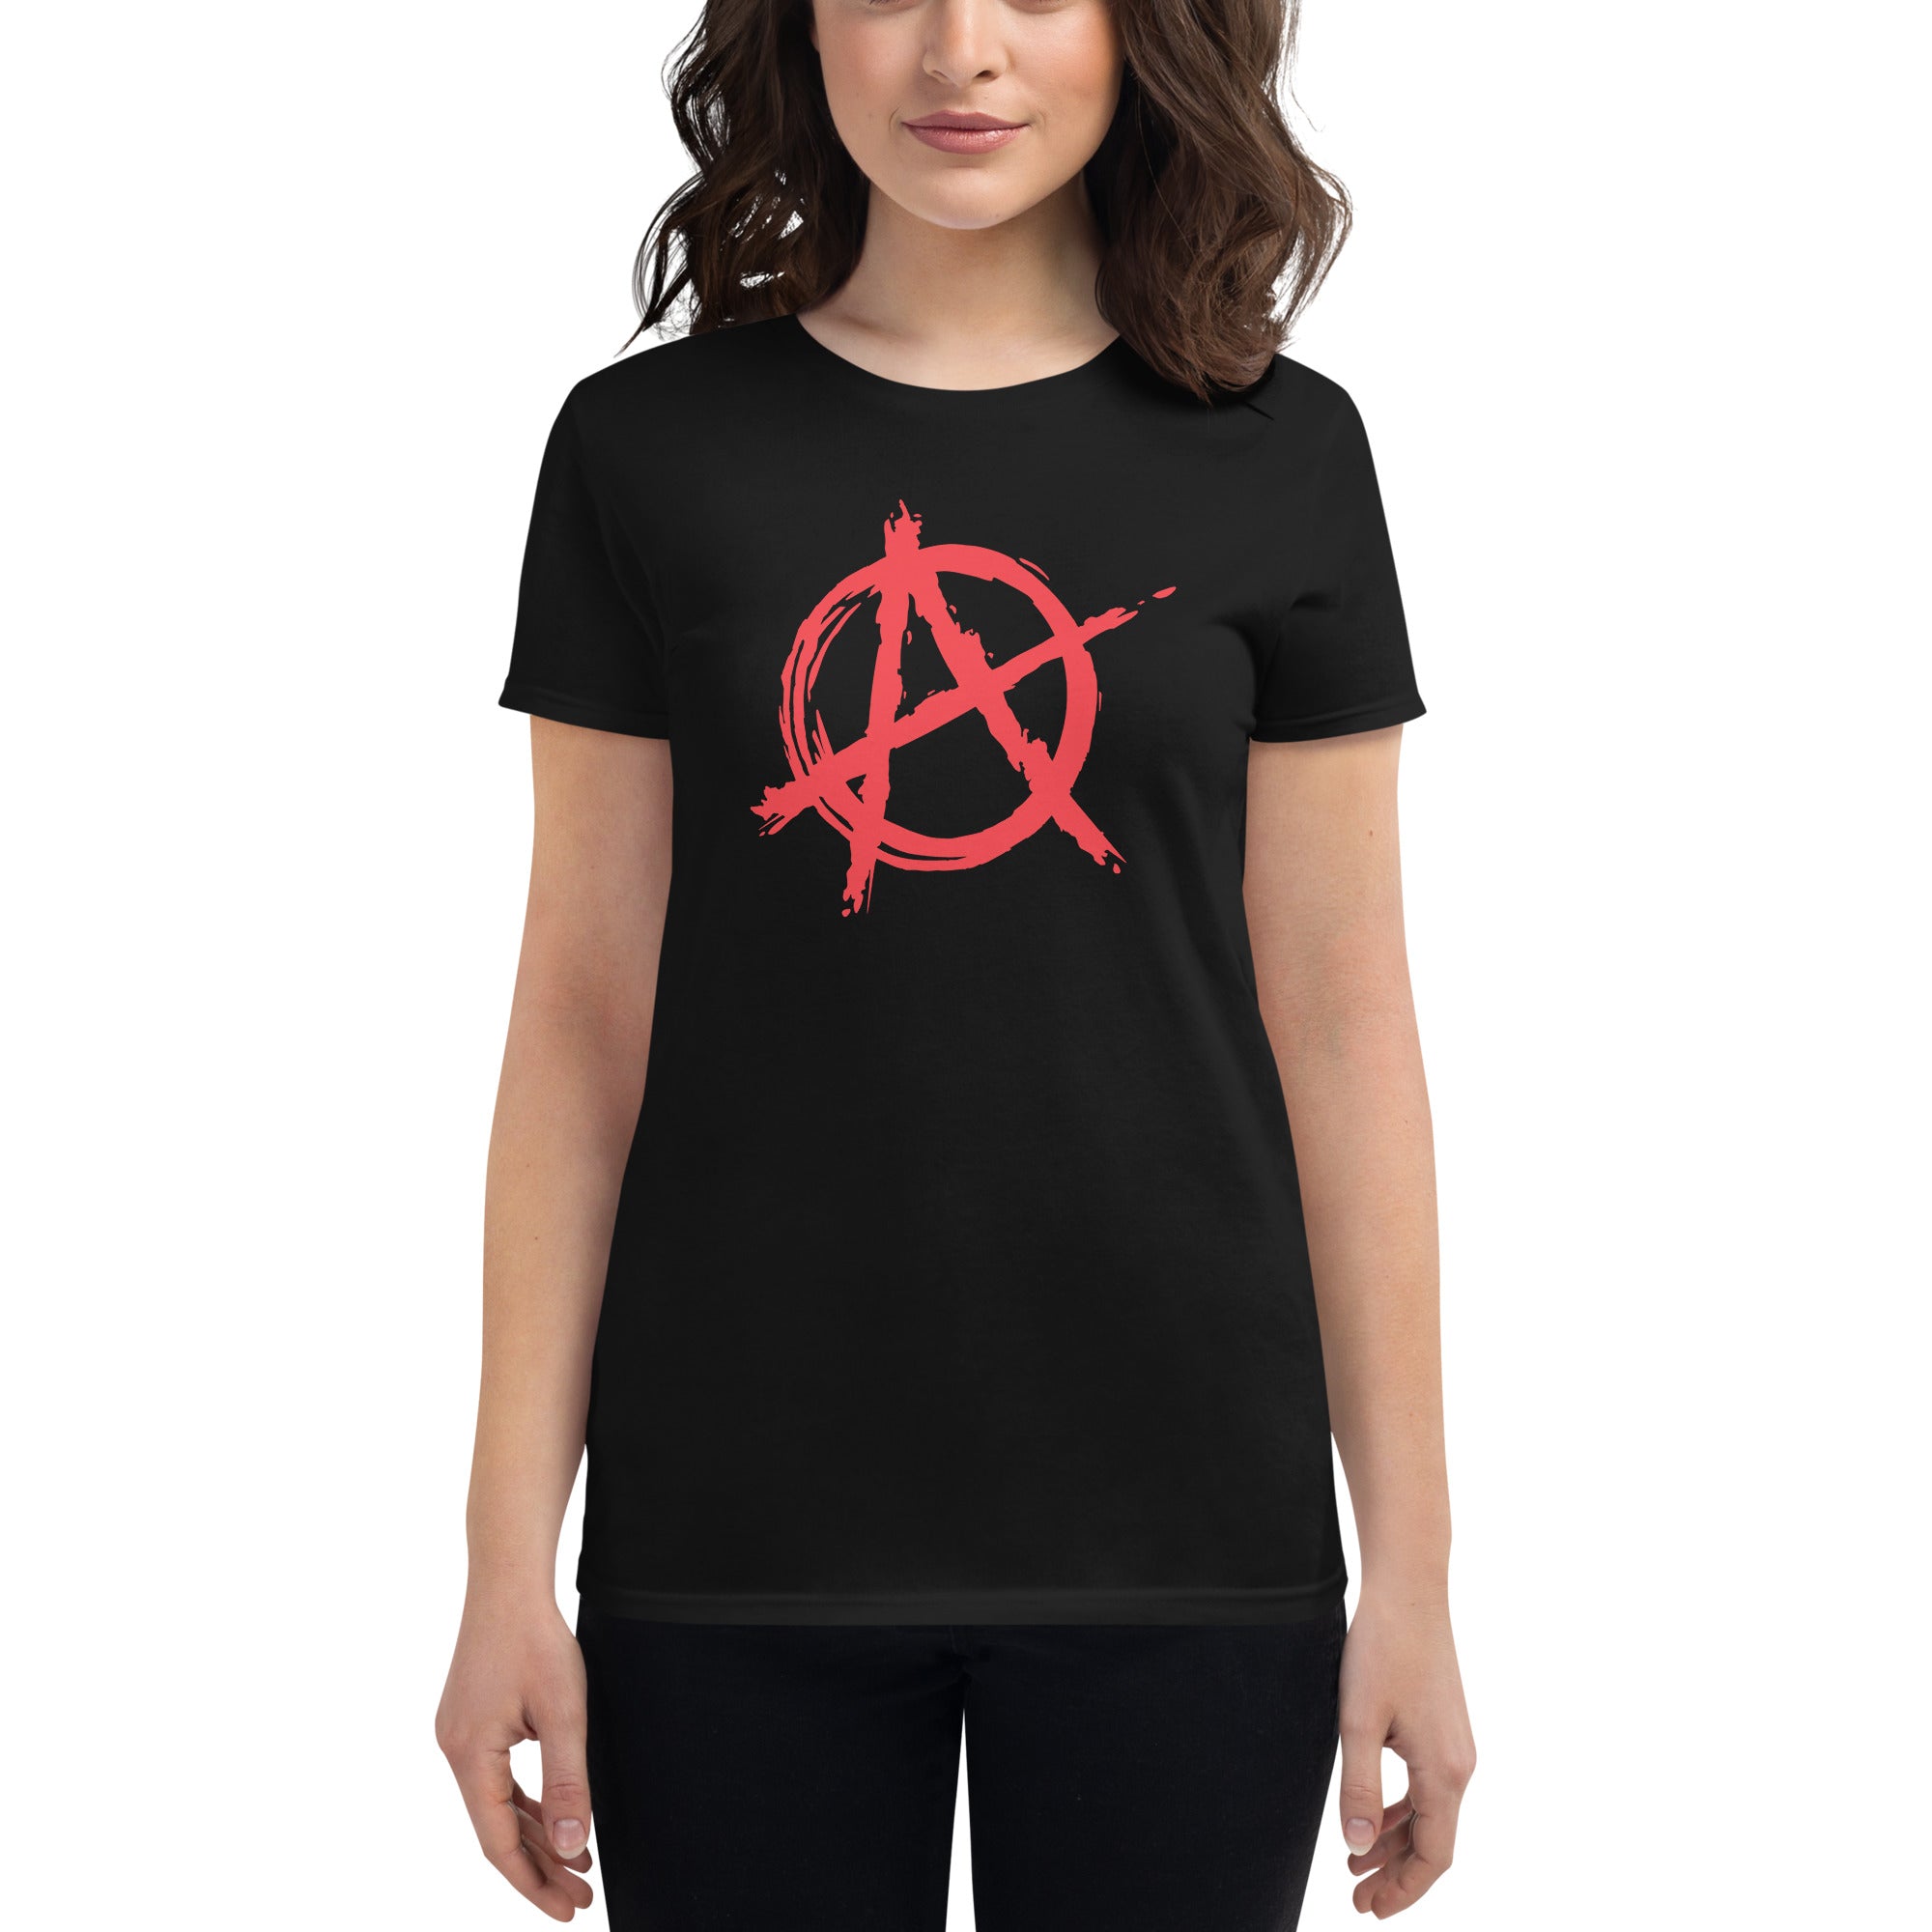 Red Anarchy is Order Symbol Punk Rock Women's Short Sleeve Babydoll T-shirt